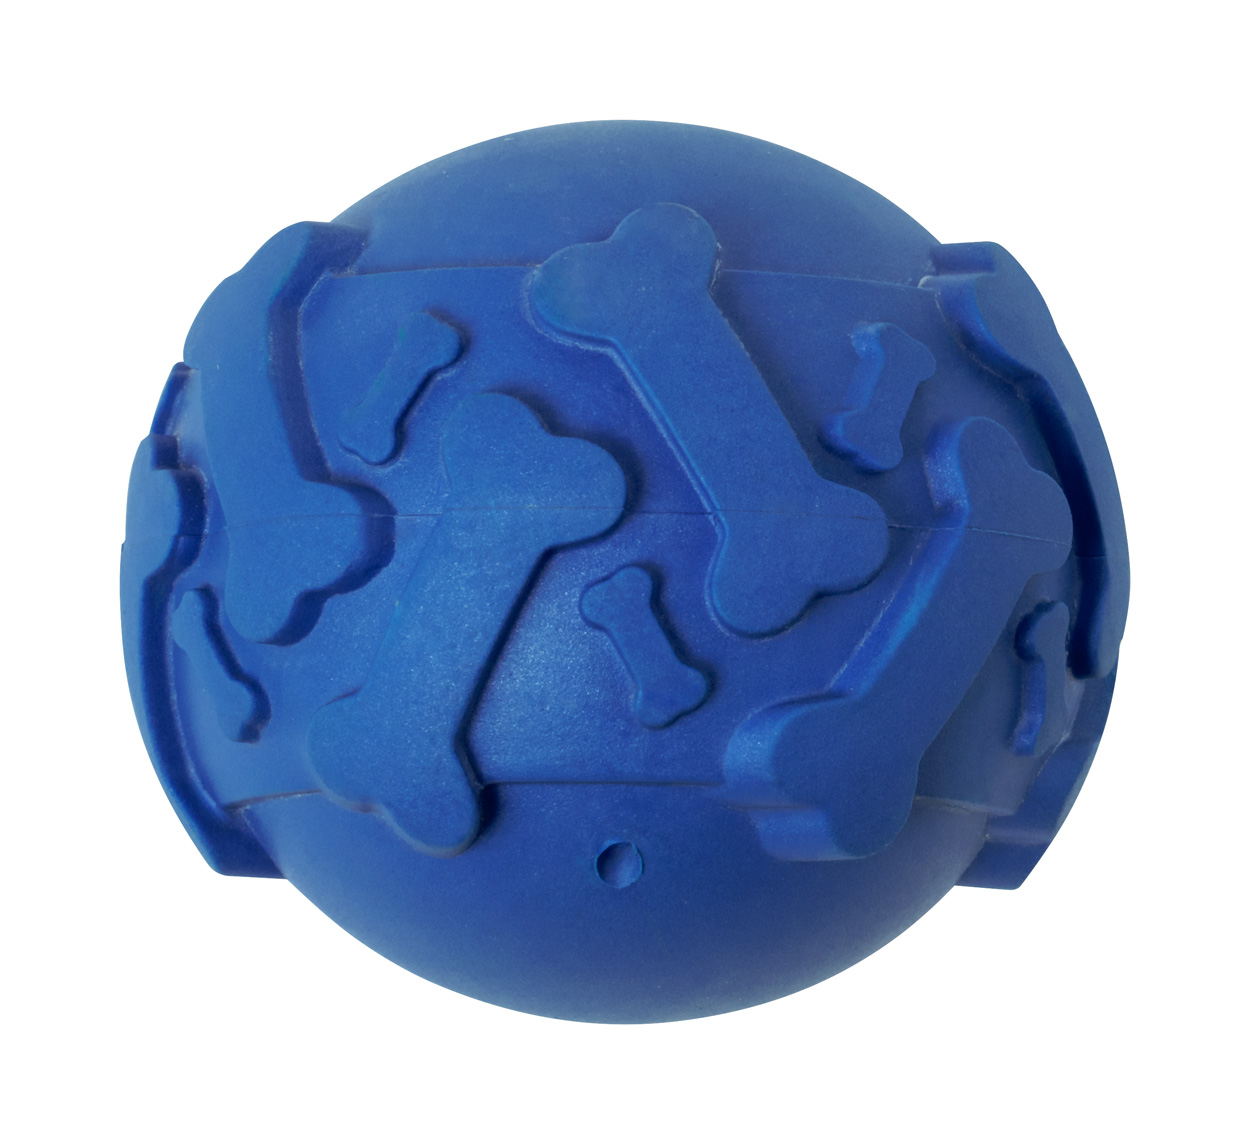 Bigel dog ball - blue